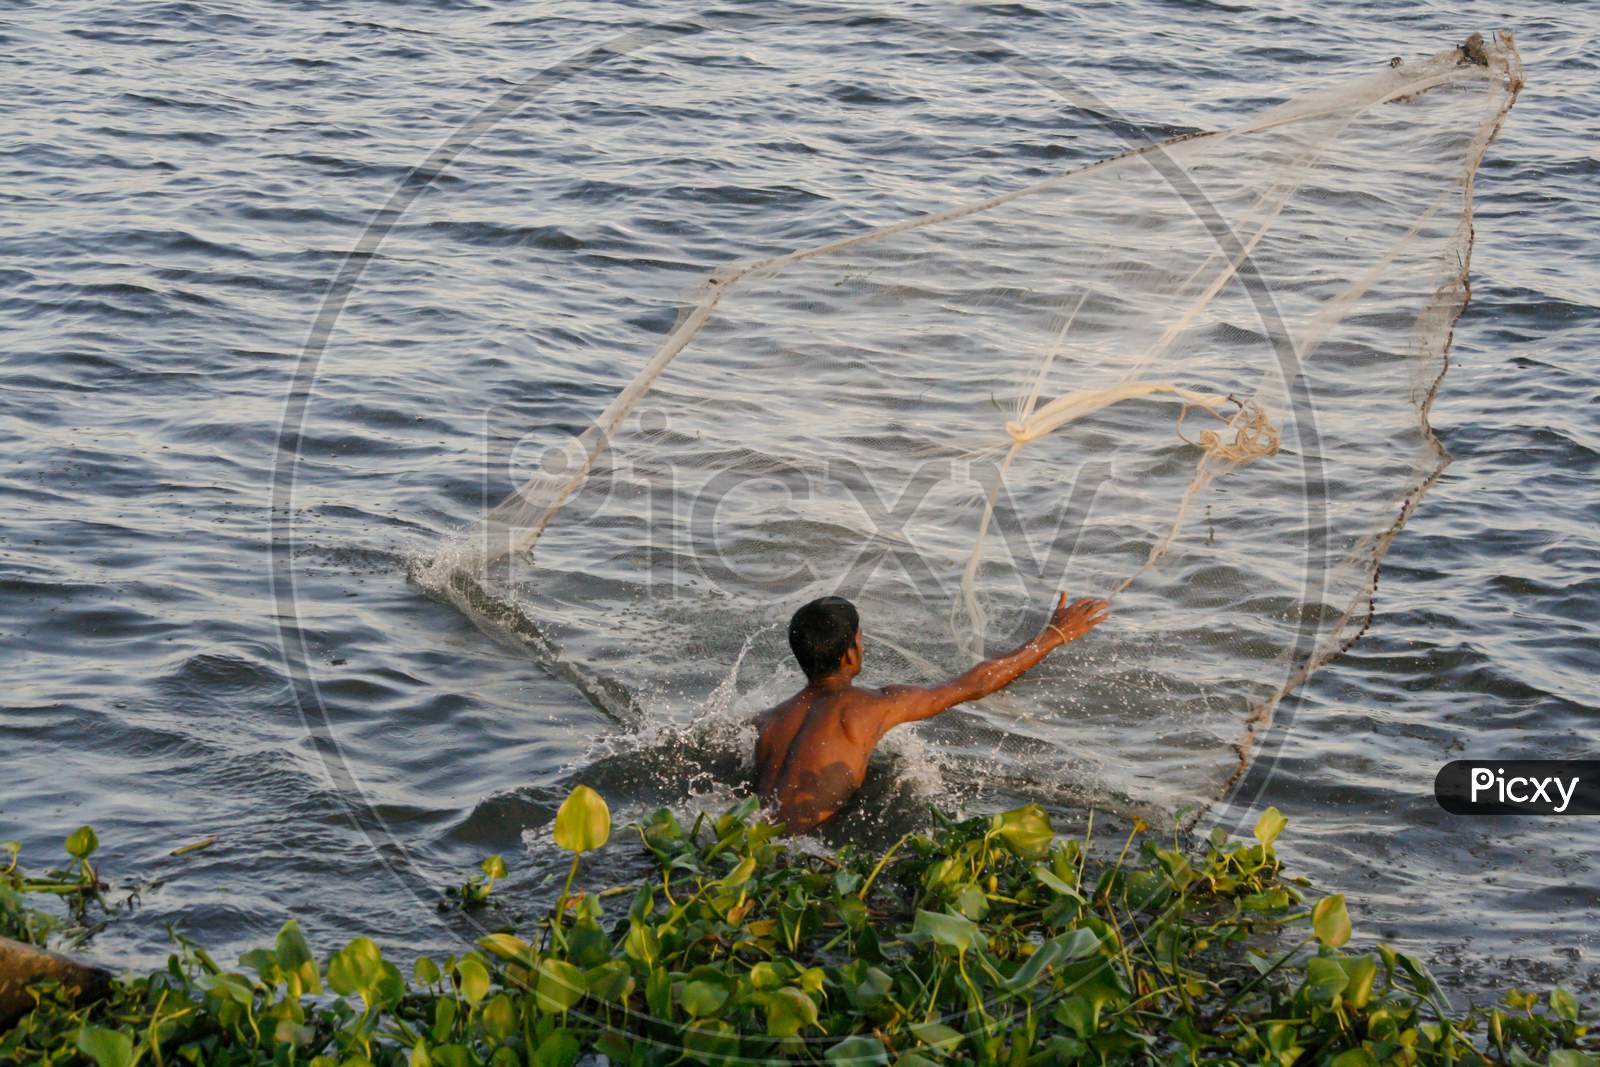 A shirtless fisherman throwing fishing net into river to catch fish in Bangladesh